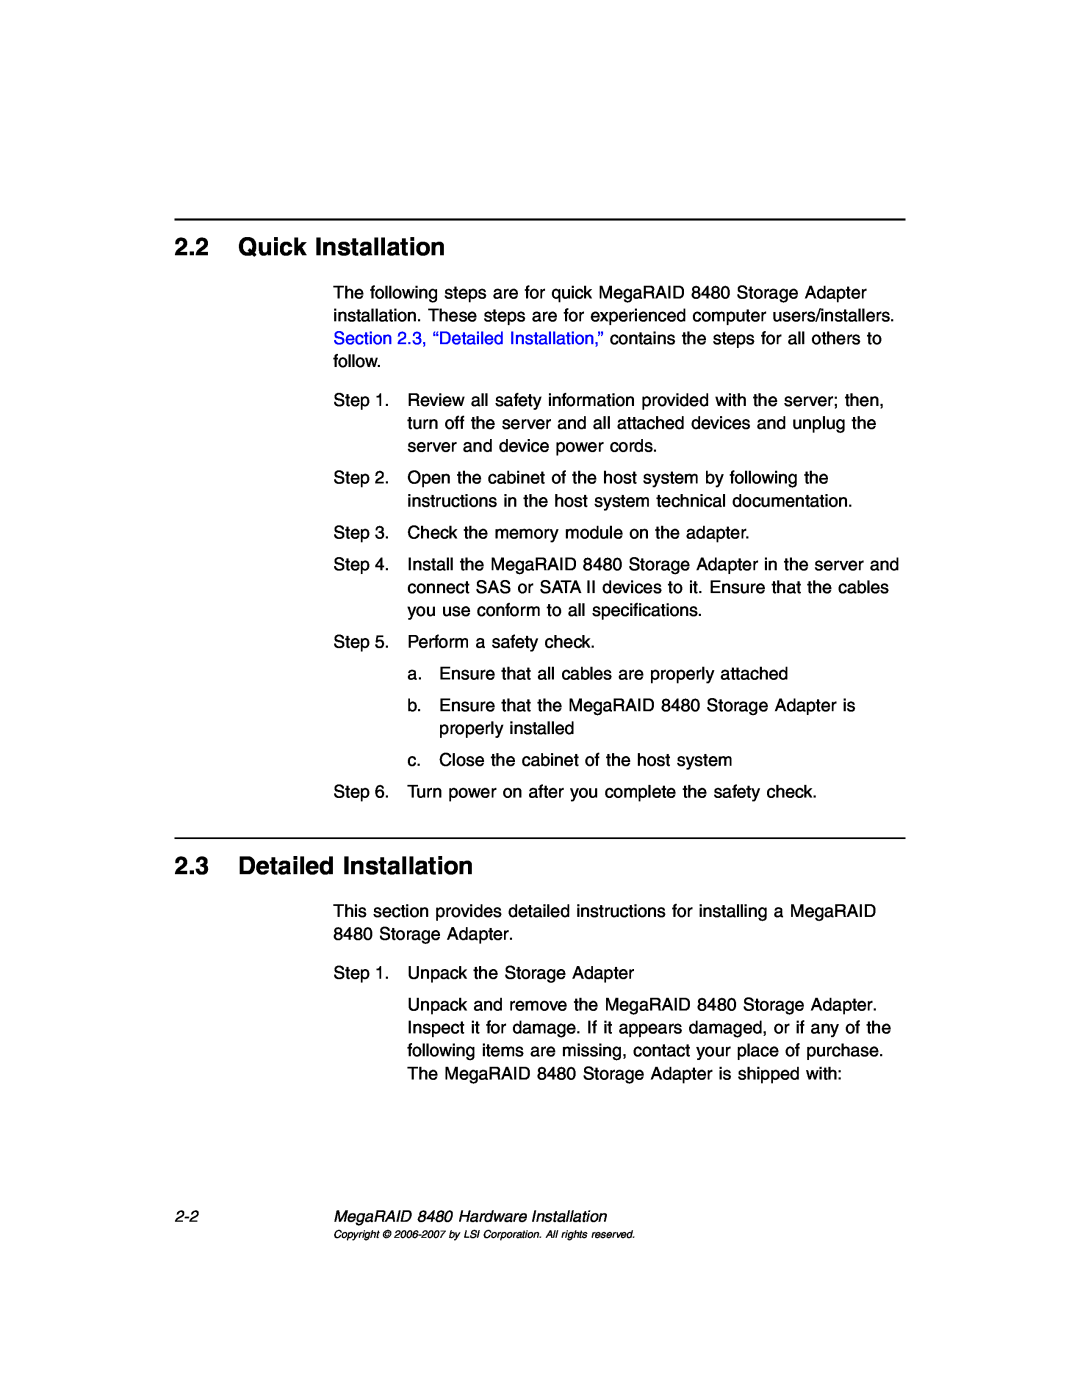 IBM manual Quick Installation, Detailed Installation, MegaRAID 8480 Hardware Installation 